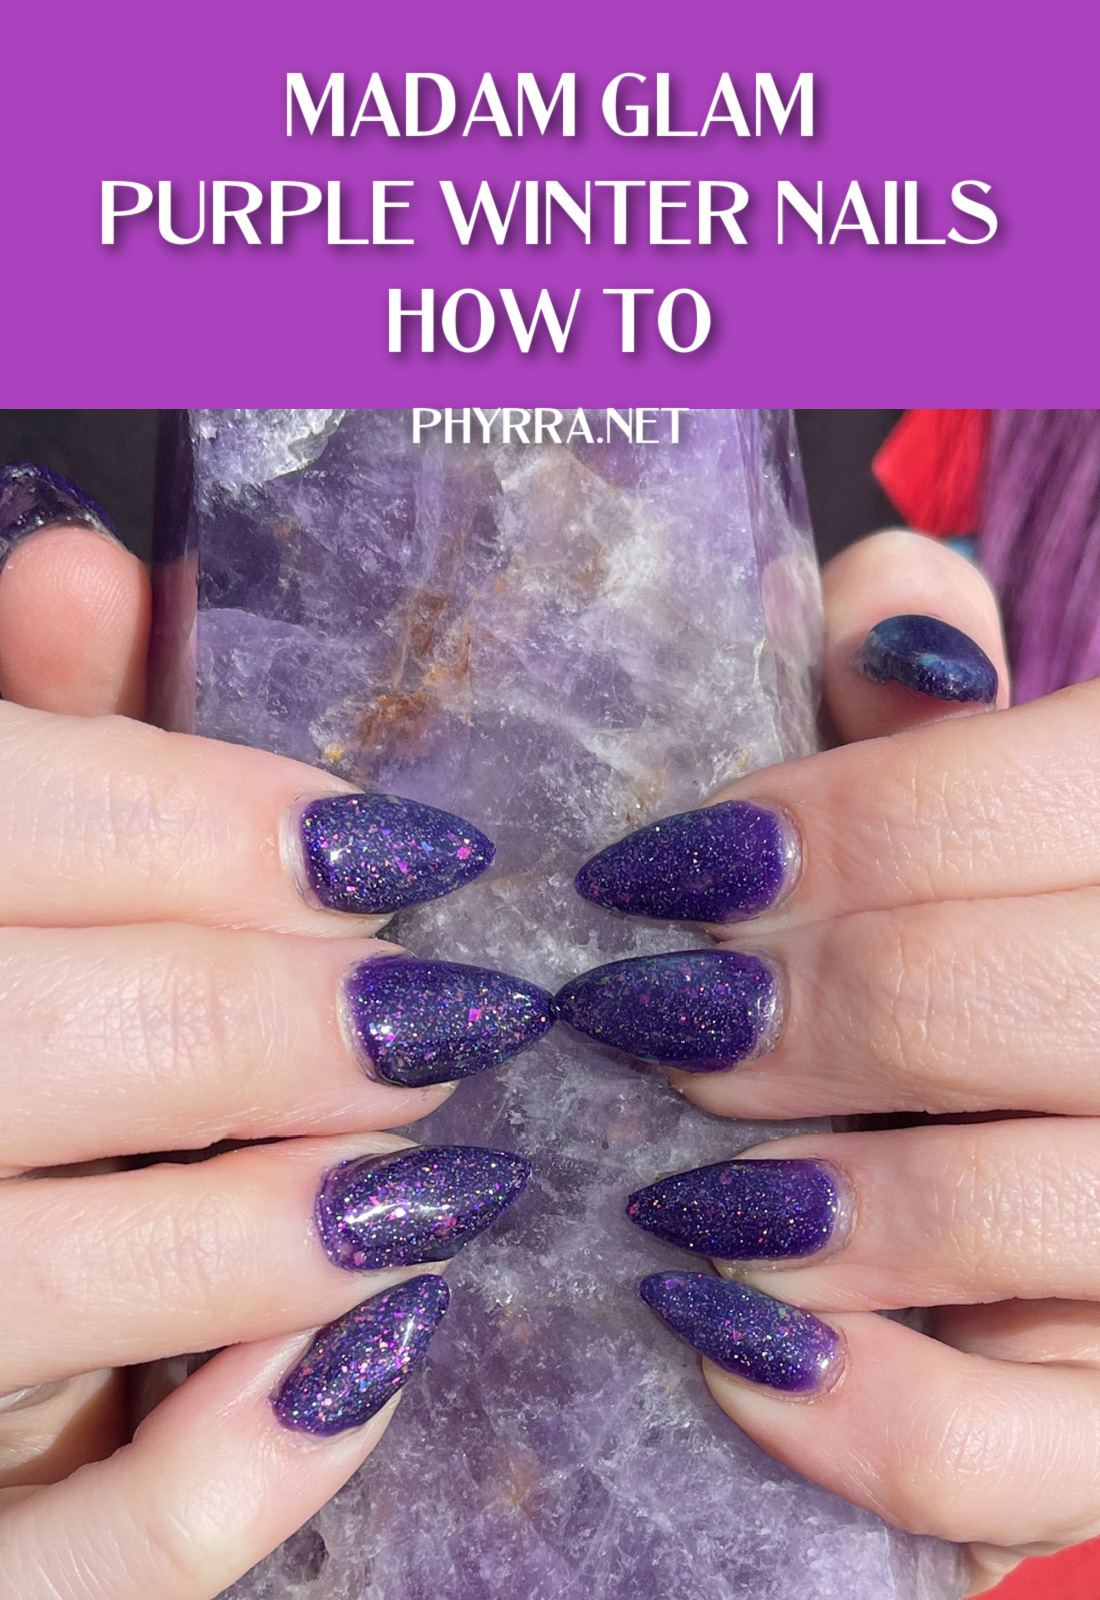 Madam Glam Purple Winter Nails How To